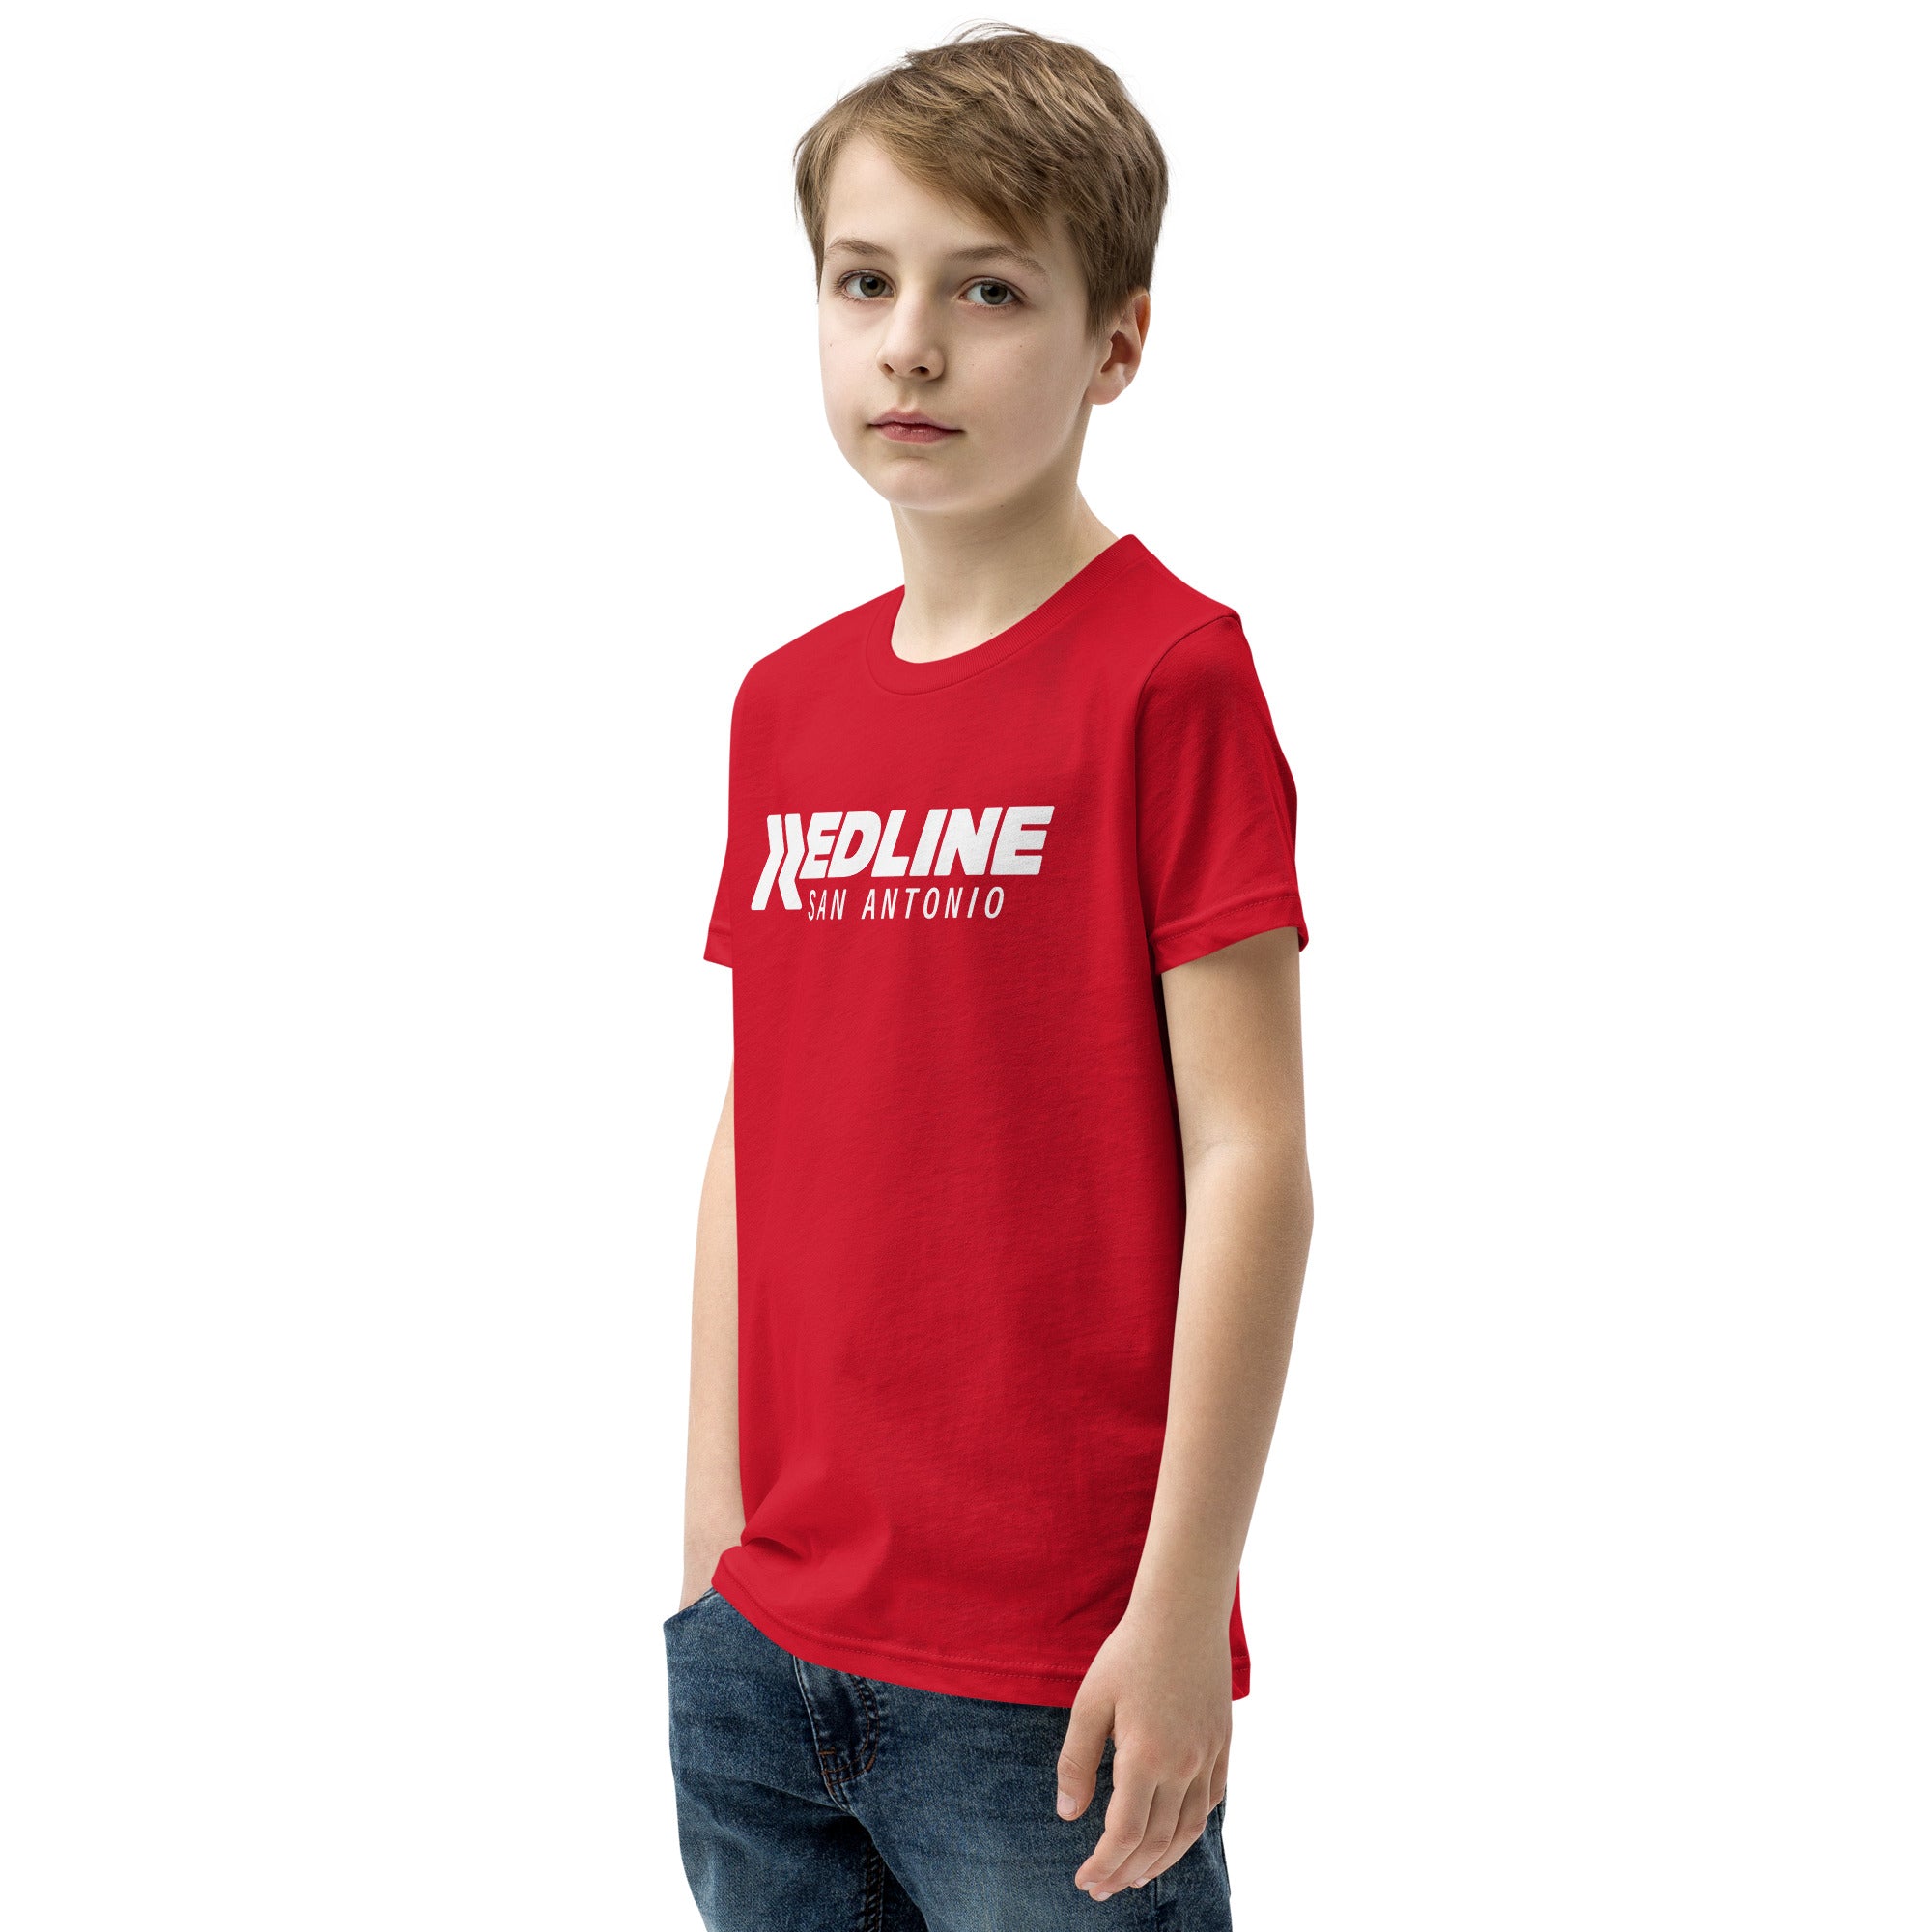 San Antonio Logo W - Red Youth Short Sleeve T-Shirt